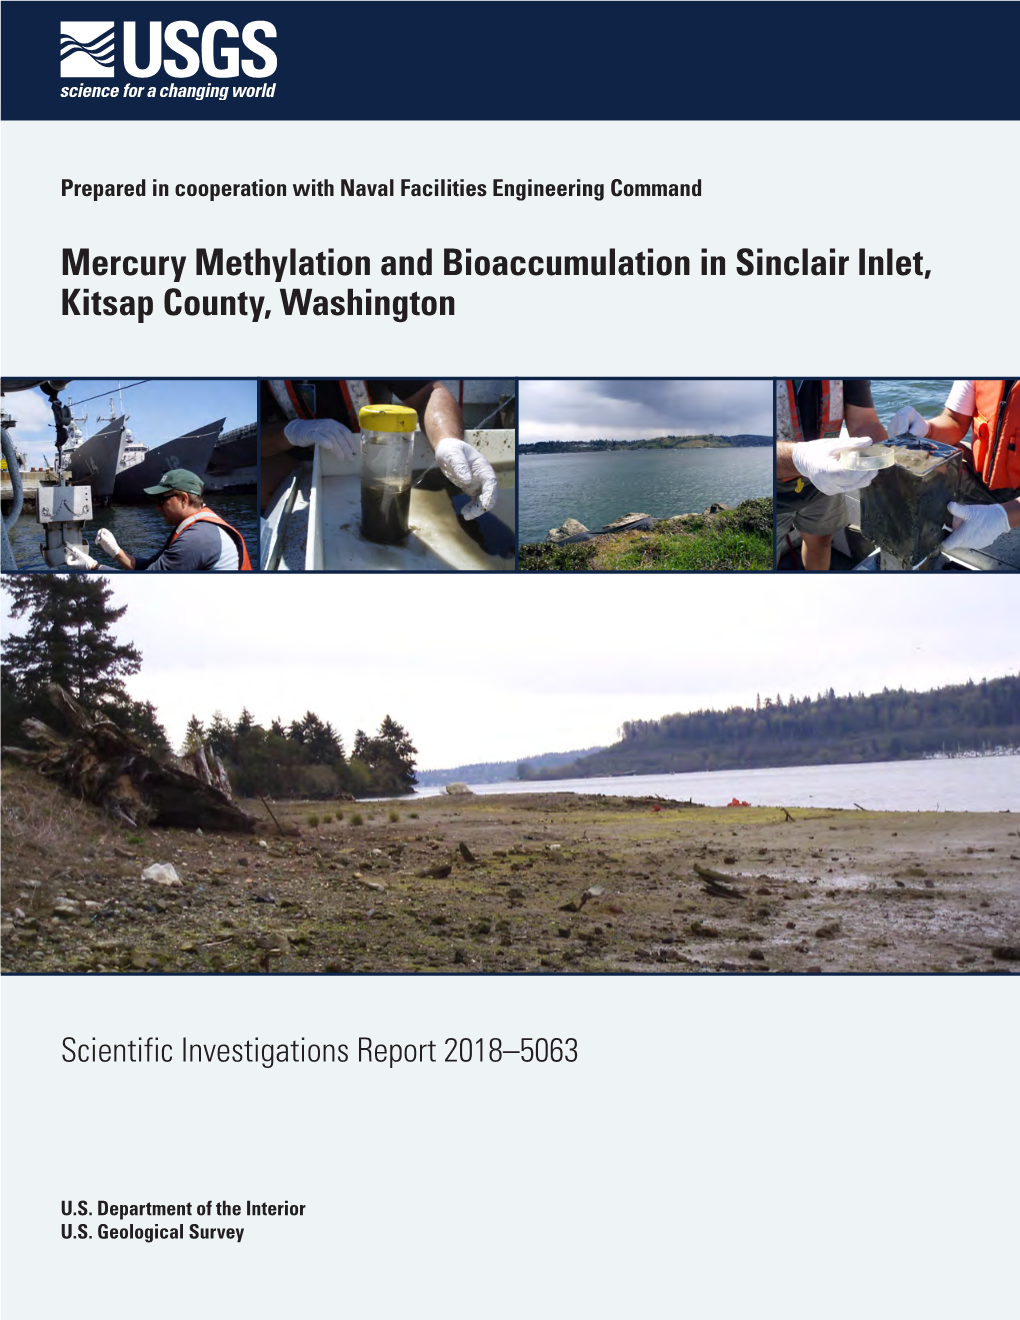 Mercury Methylation and Bioaccumulation in Sinclair Inlet, Kitsap County, Washington